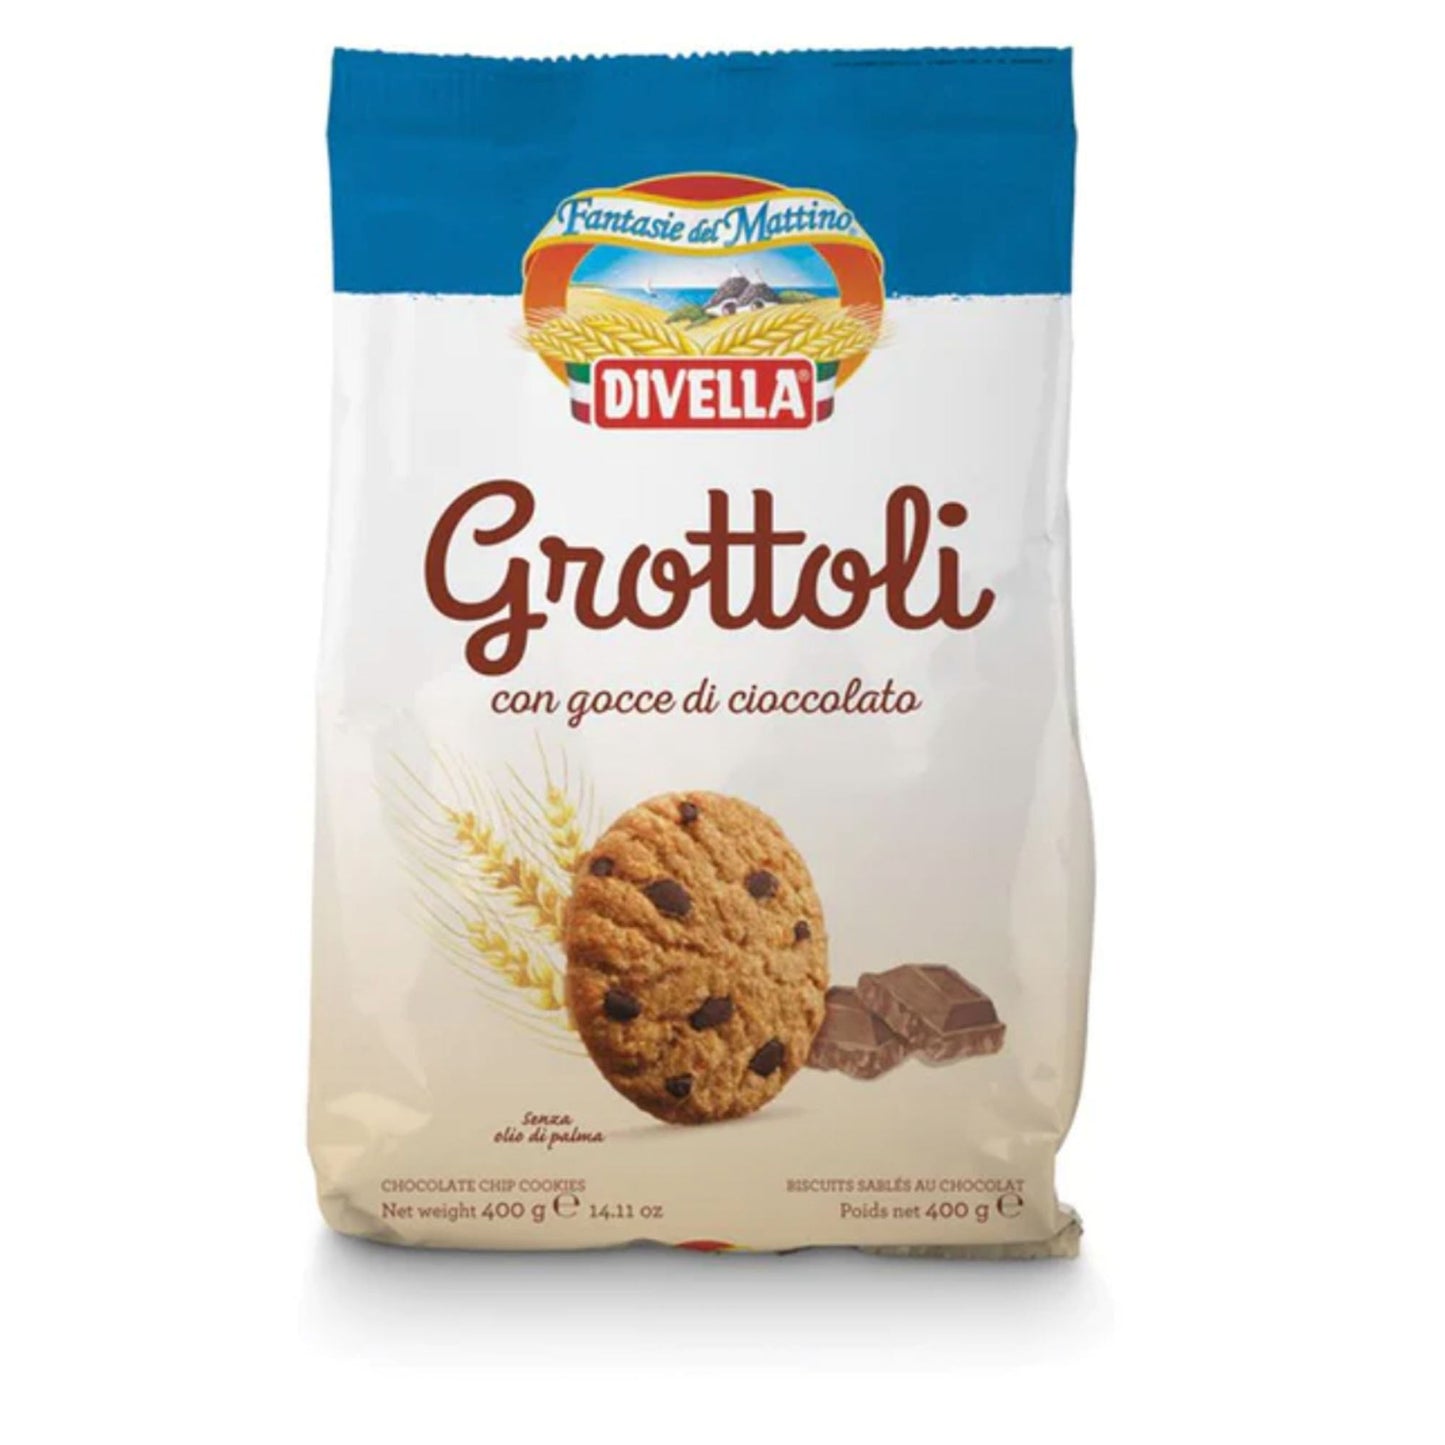 Divella Grottoli Chocolate